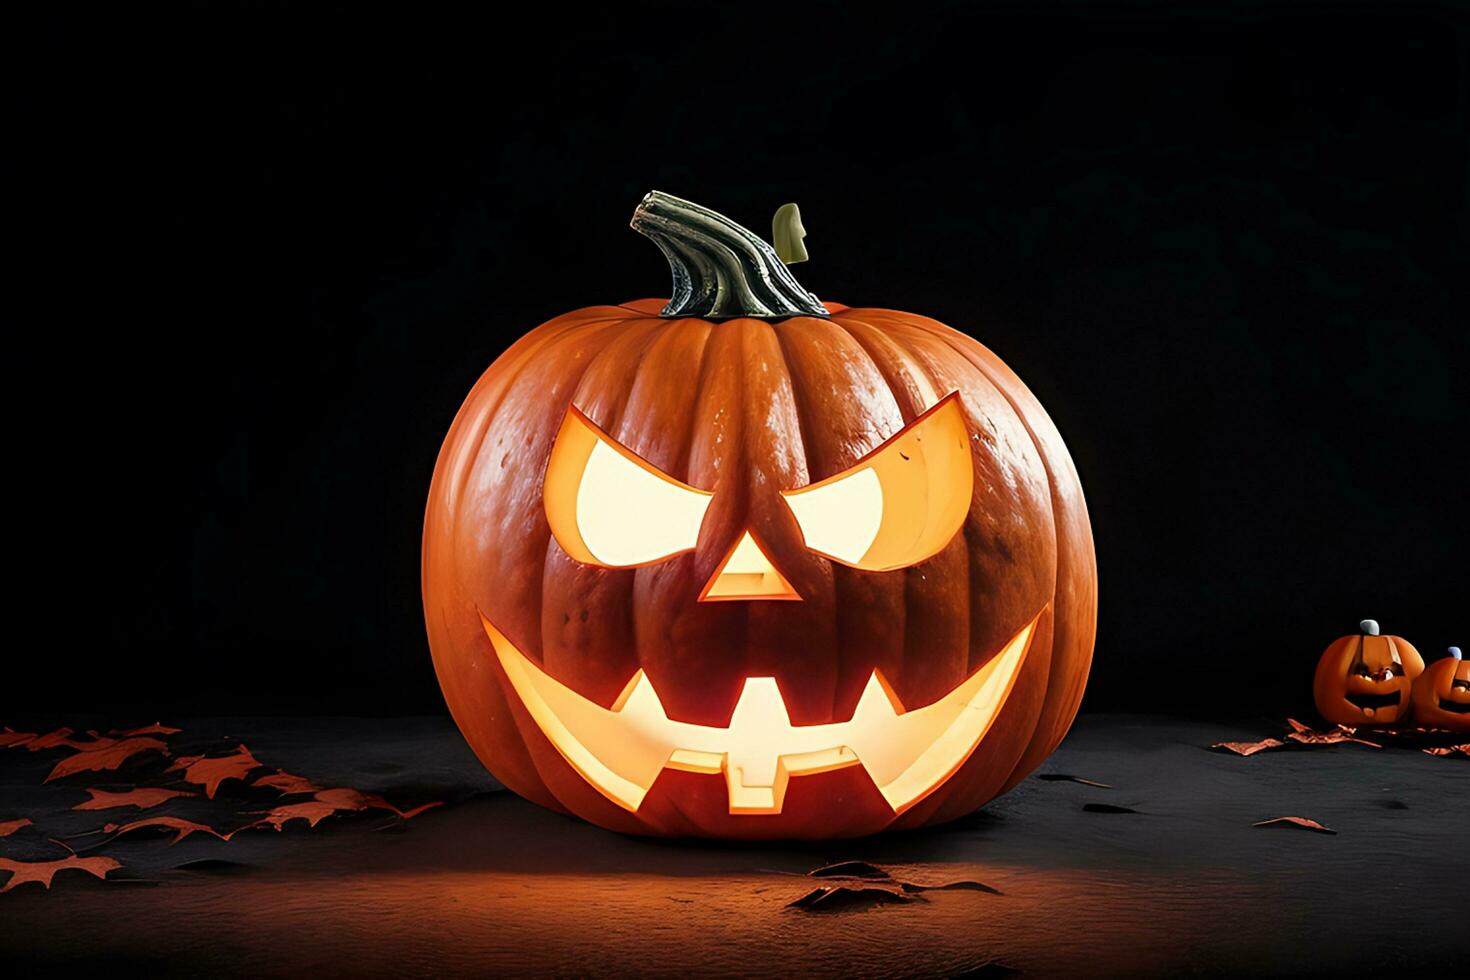 Scary ghost pumpkin with Halloween dark background photo